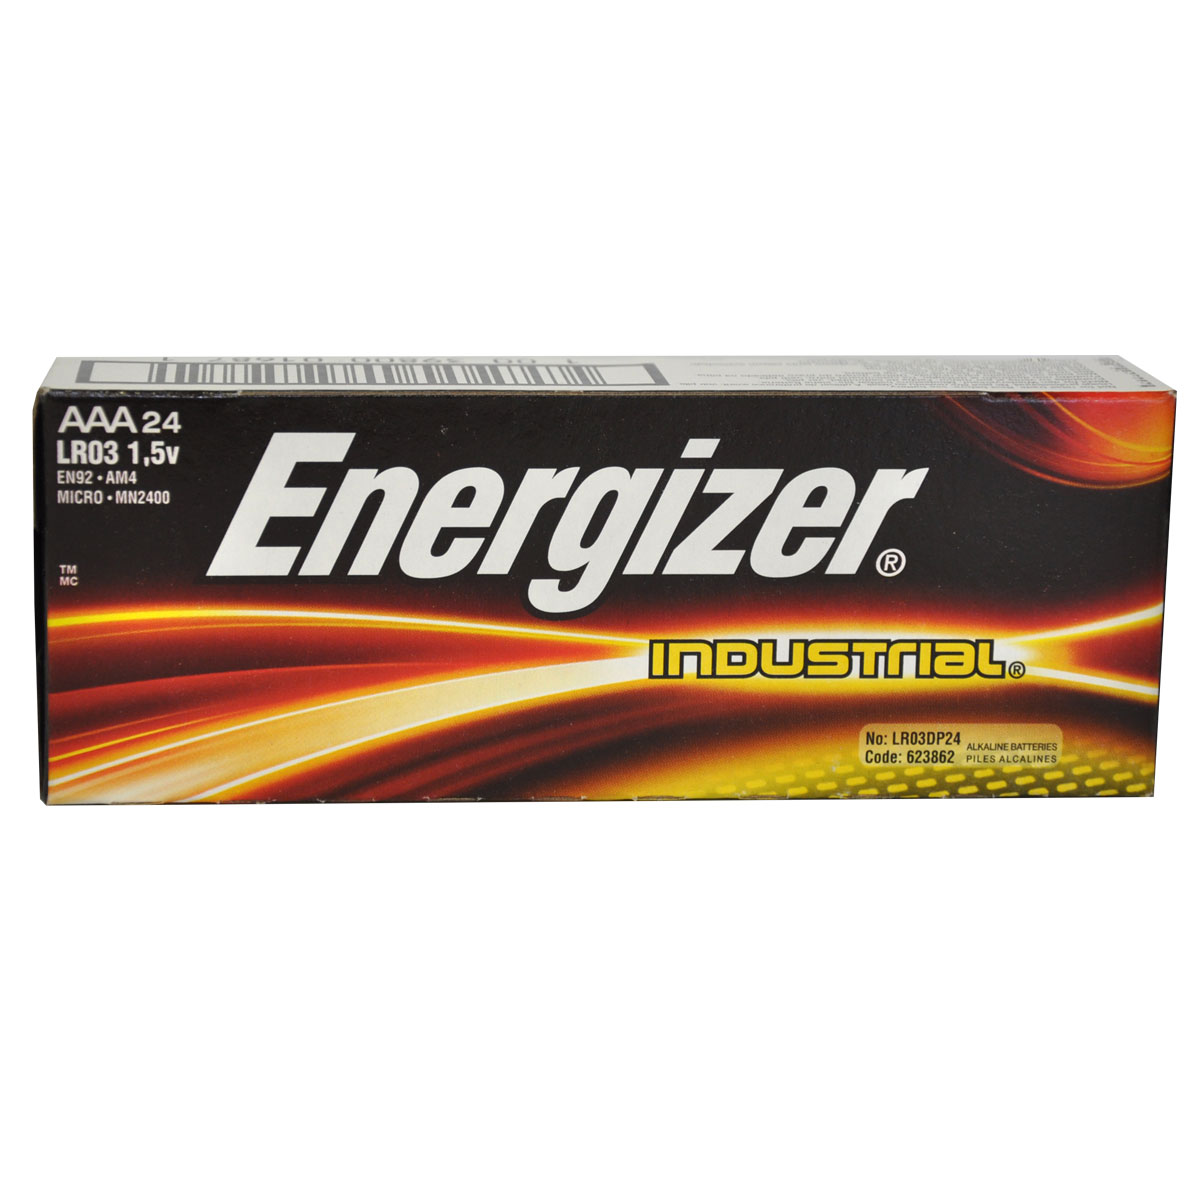 Energizer Industrial AAA Batteries - 24 Pack